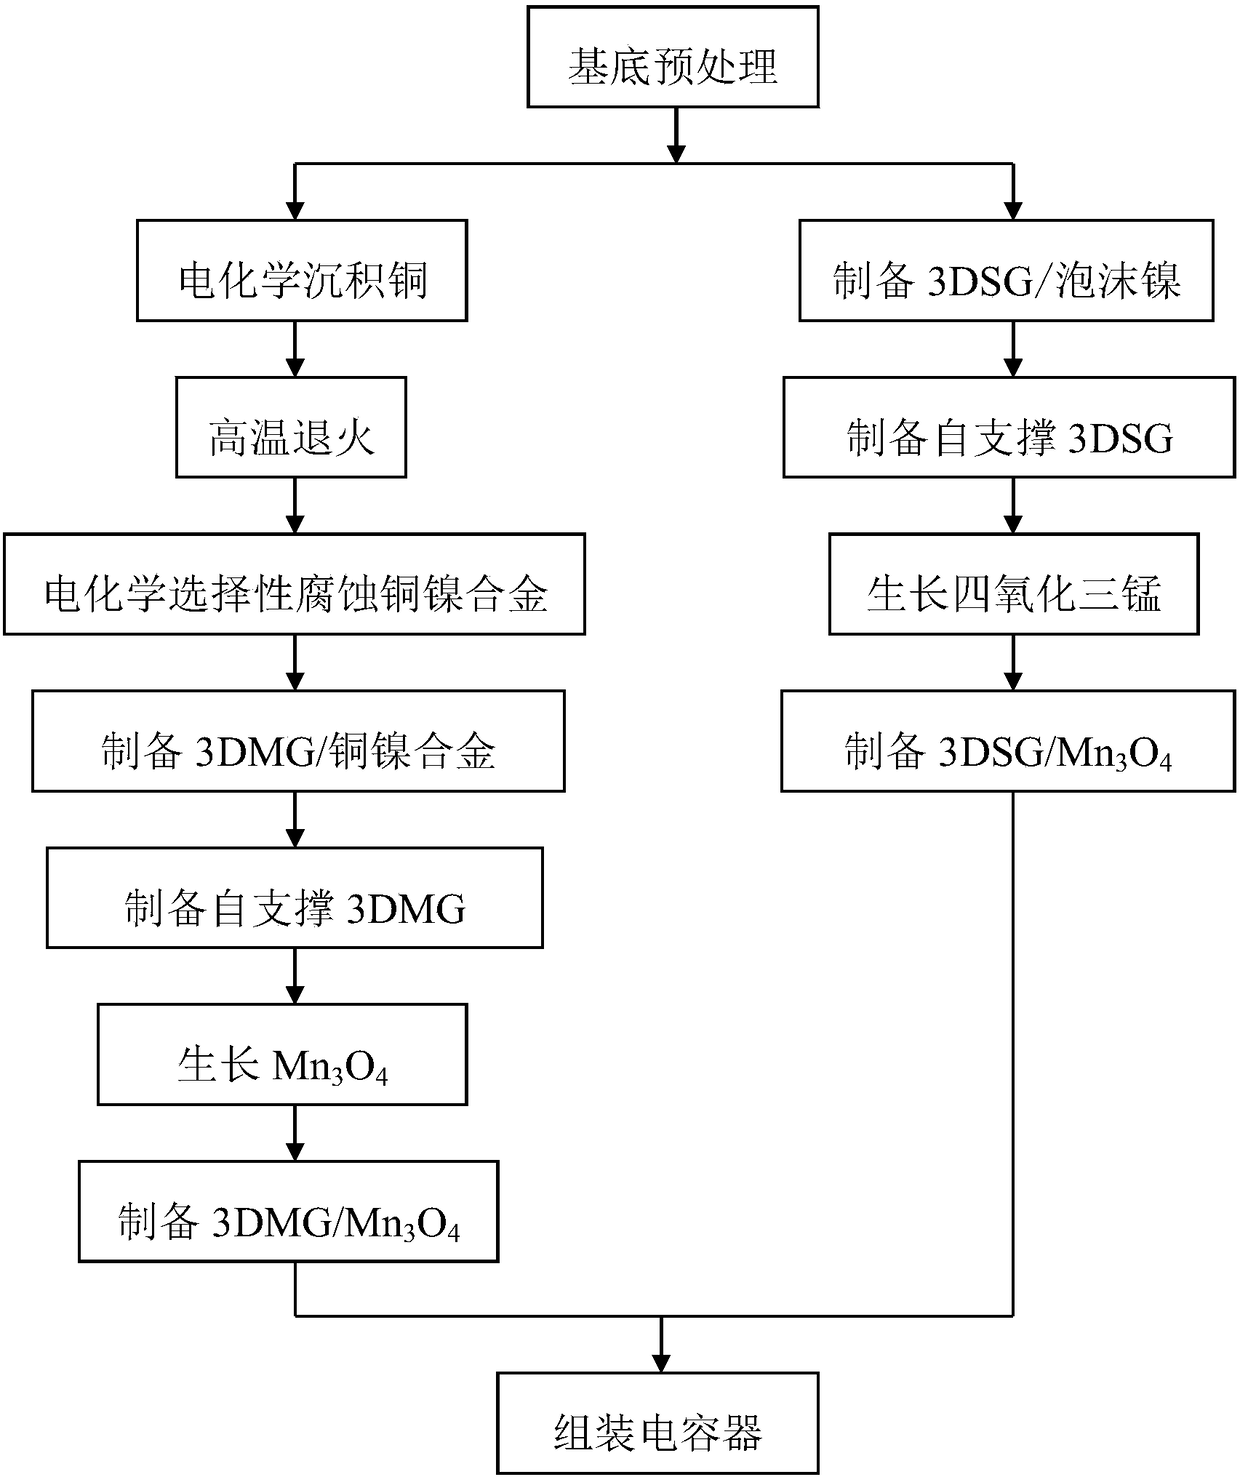 3dsg/mn3o4/3dmg-based asymmetric supercapacitor and preparation method